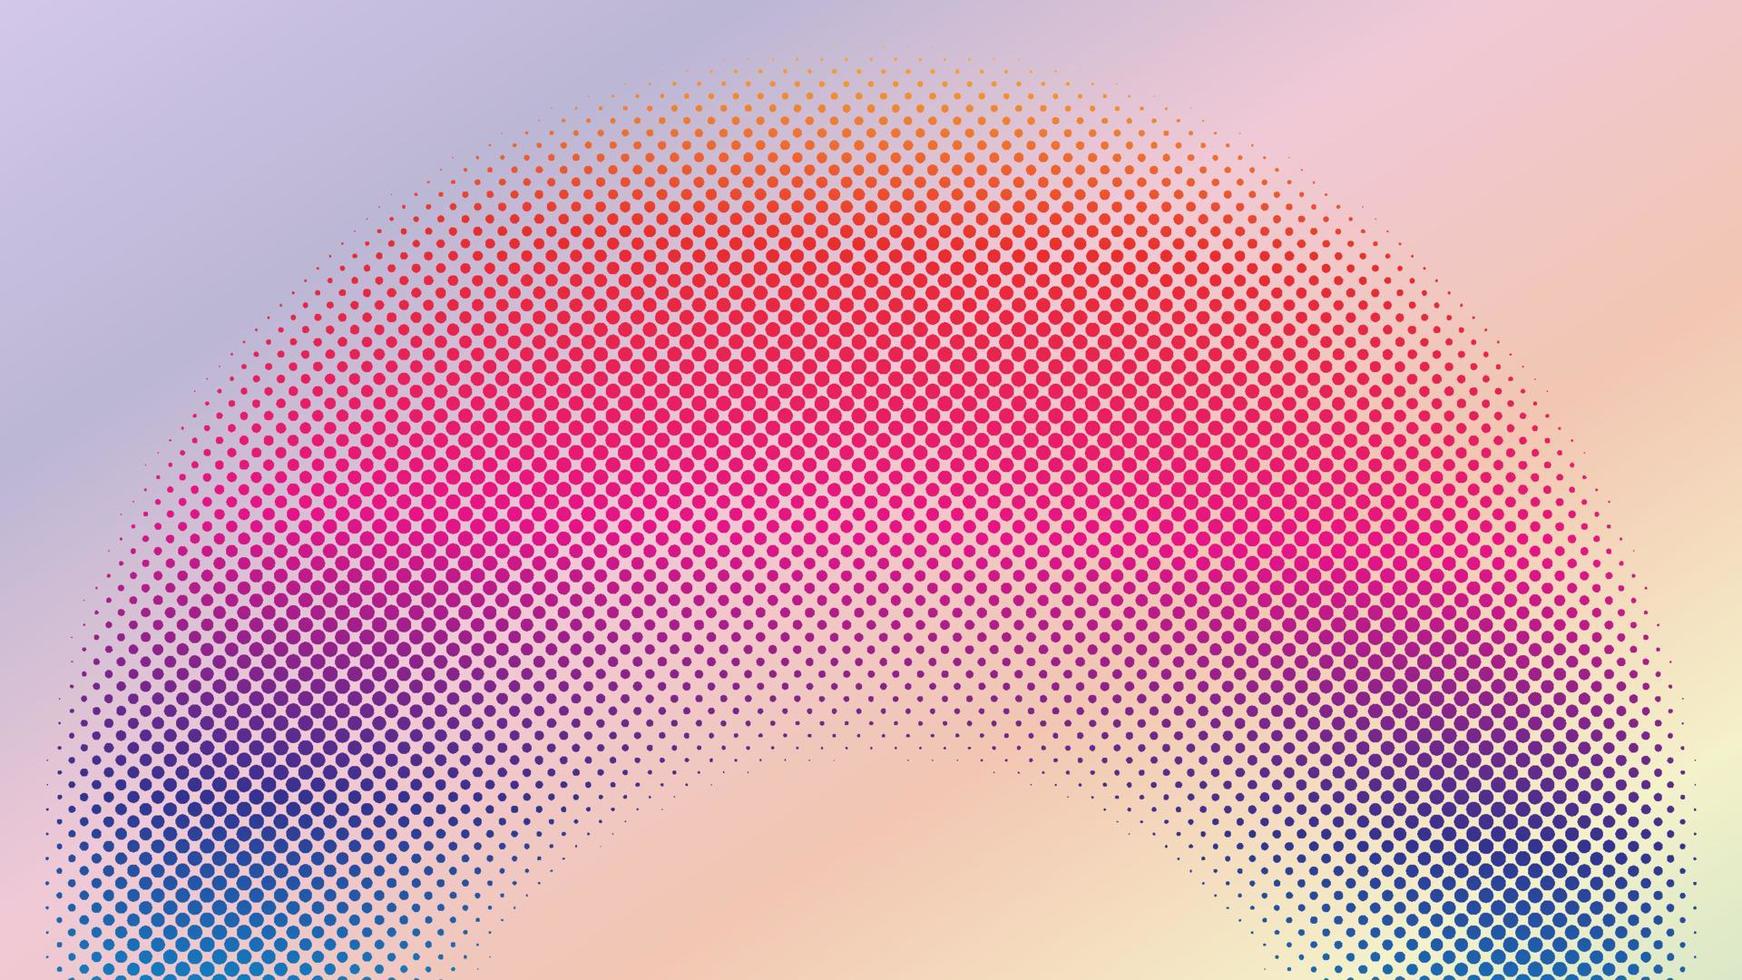 Colorful Radial Halftone Background Design Template, Pop Art, Abstract Dots Pattern Illustration, Modern Texture Element, Pink Orange Violet Purple Gradation Wallpaper, EPS 10 file Vector Project